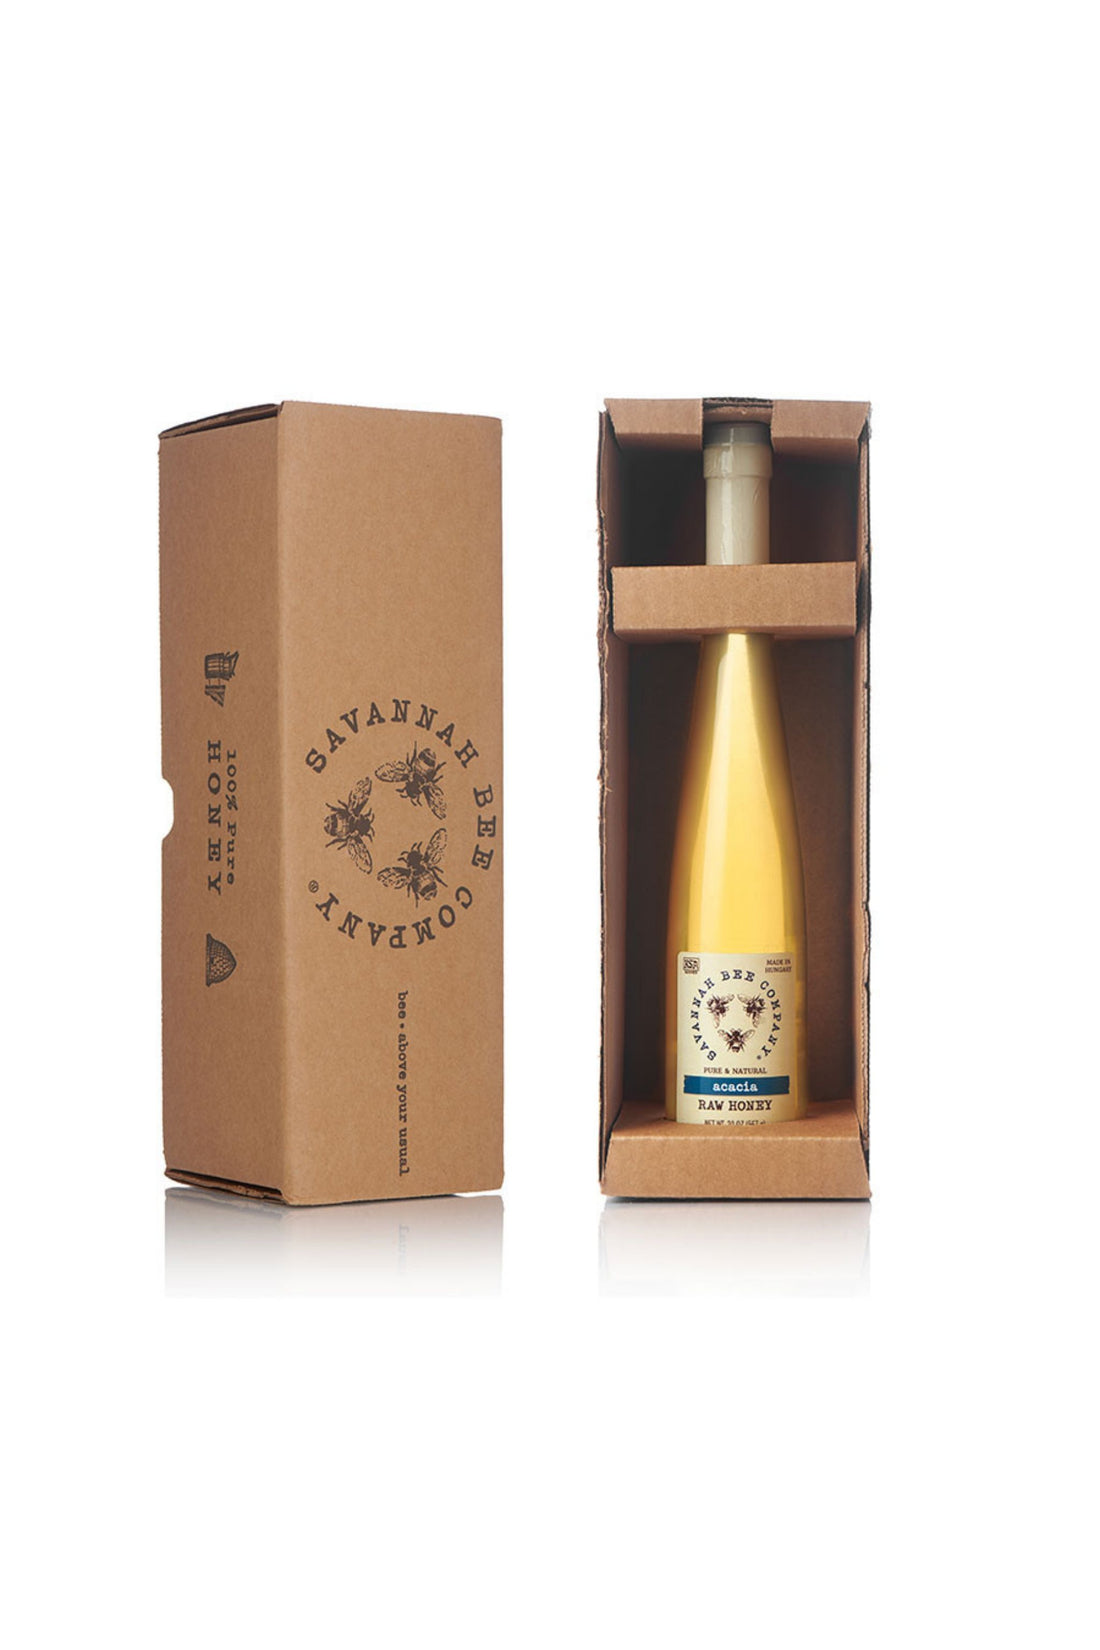 Pure & Natural Acacia Raw Honey 20 oz. flute in a gift box with Savannah Bee Company logo studio image.